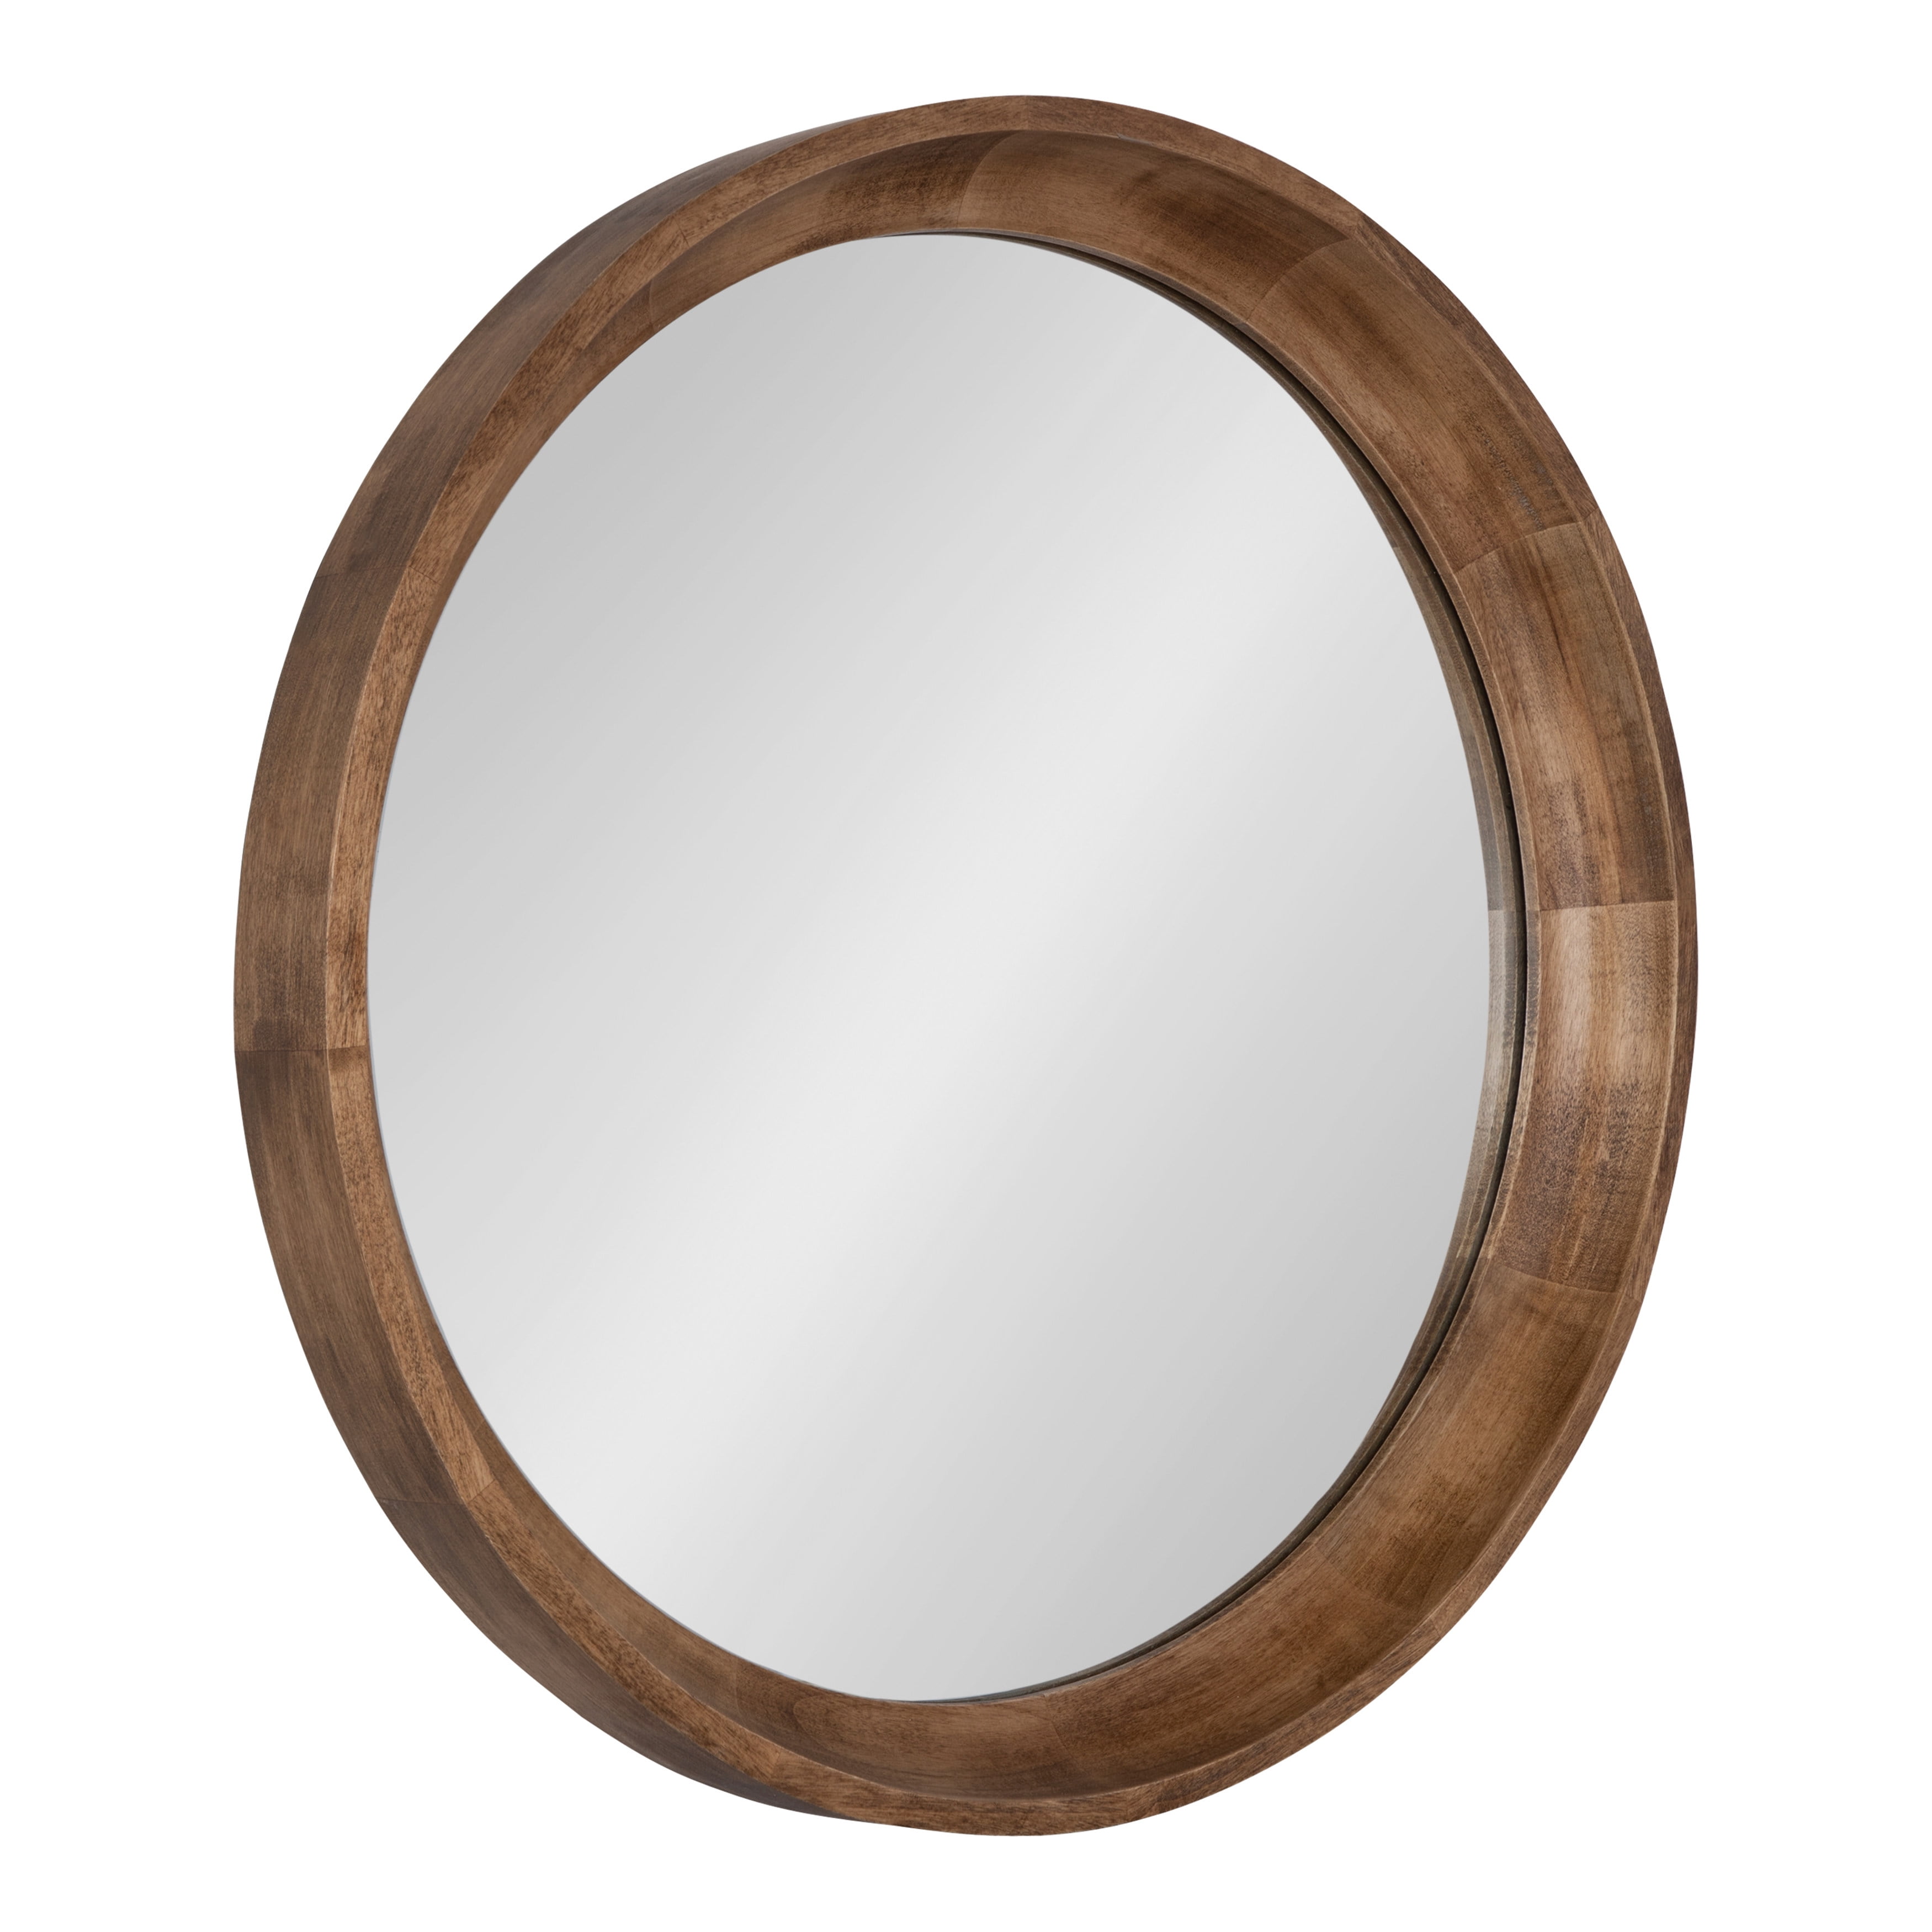 Laurel Colfax Round Wood Mirror, Rustic Oval Wood Mirror